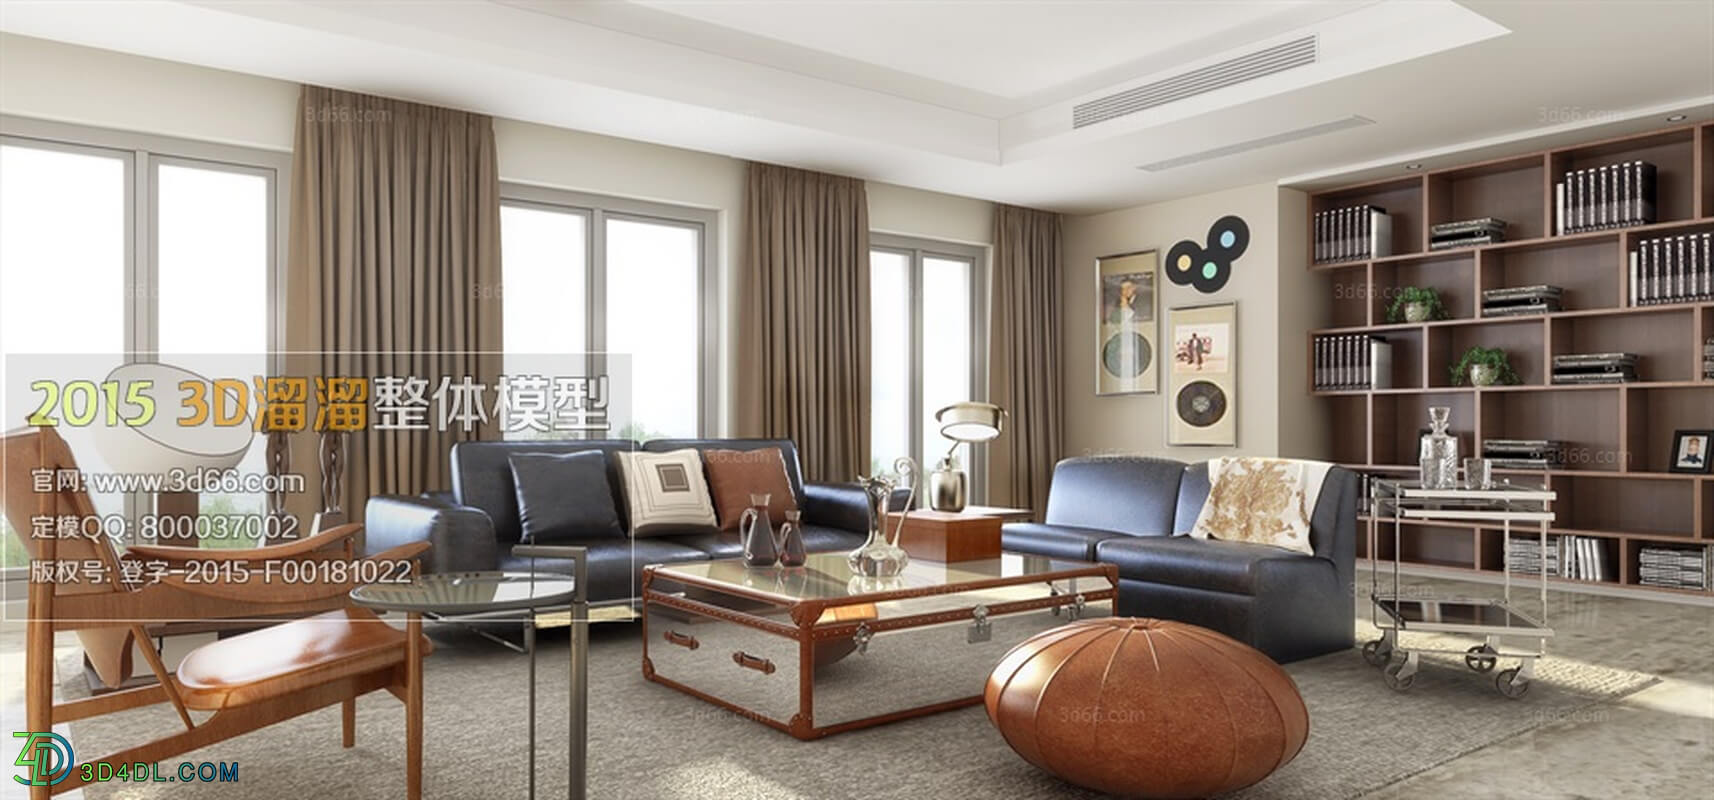 3D66 American Style Livingroom 2015 (263)